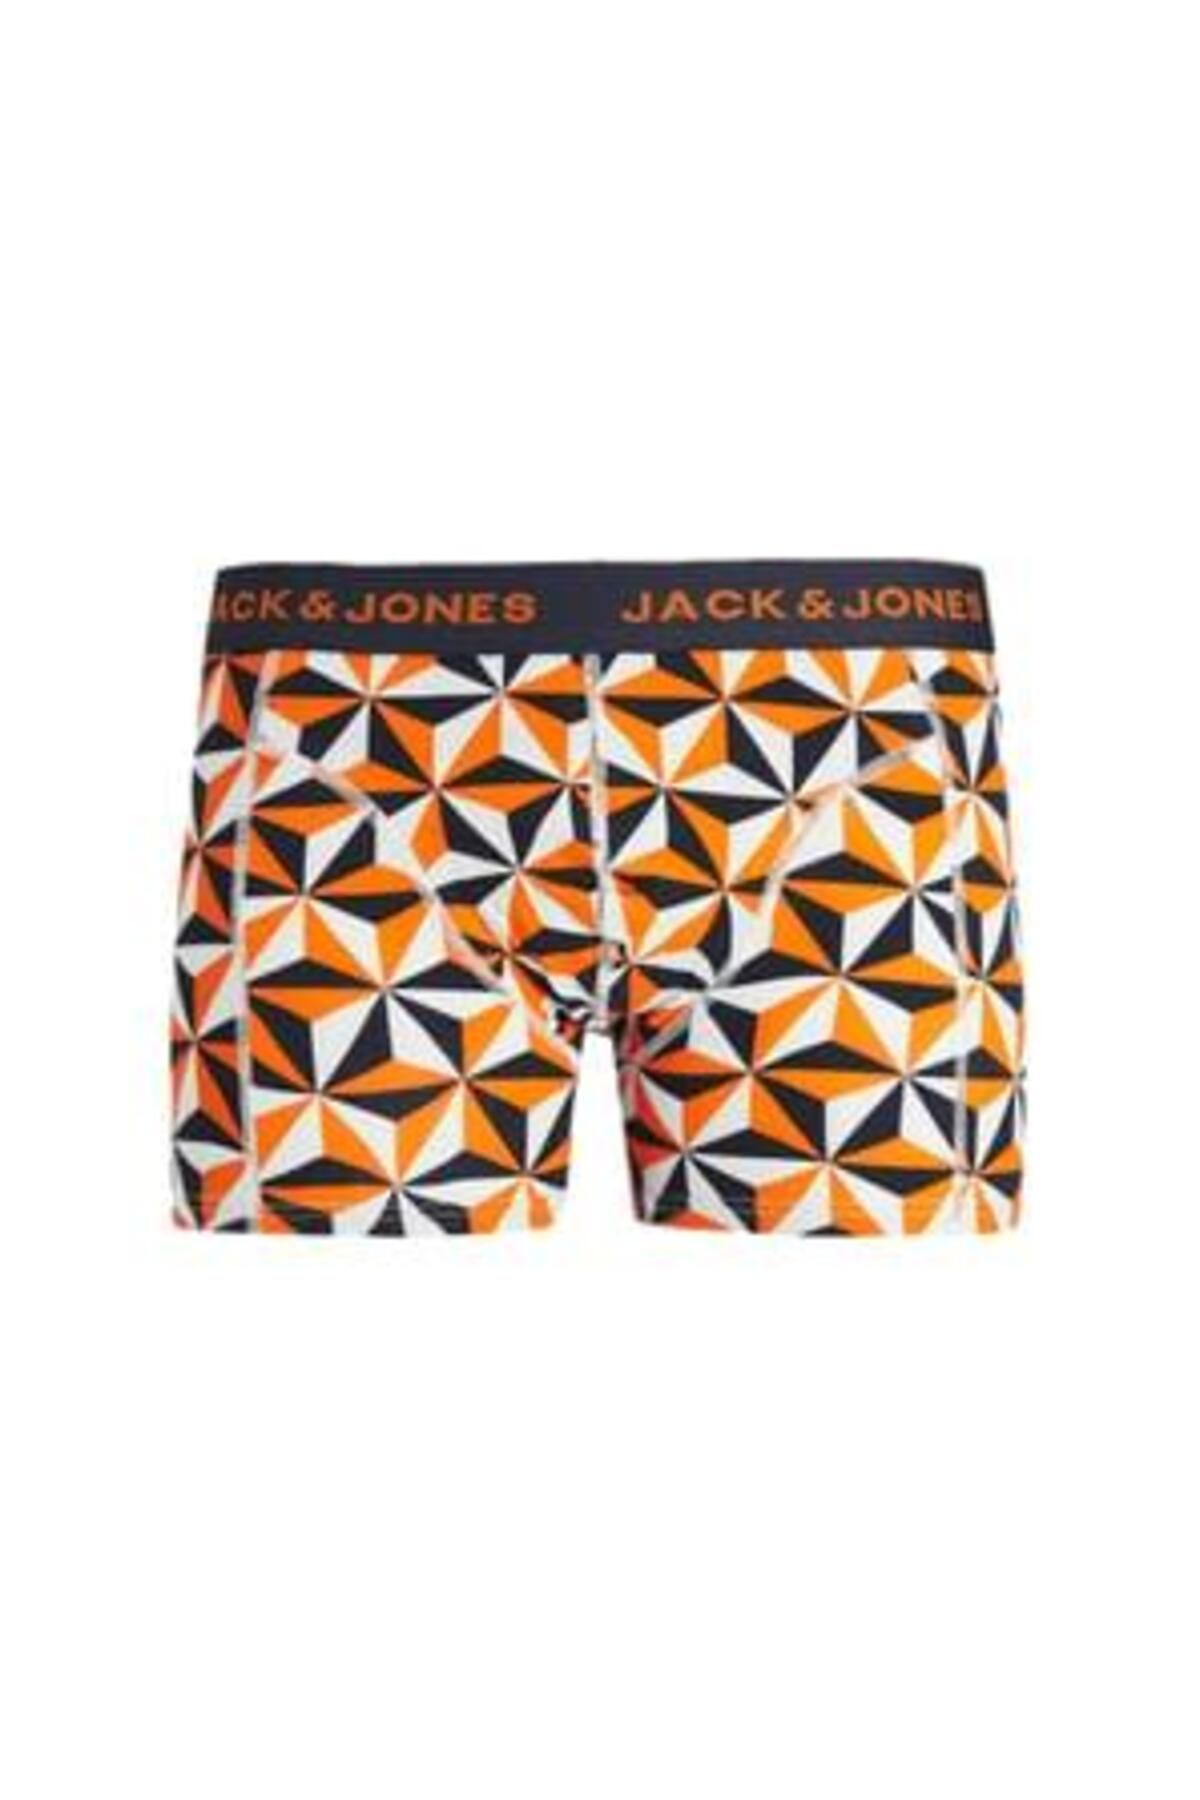 Jack & Jones 12250985 Jacgeometric Gems Trunk Turuncu